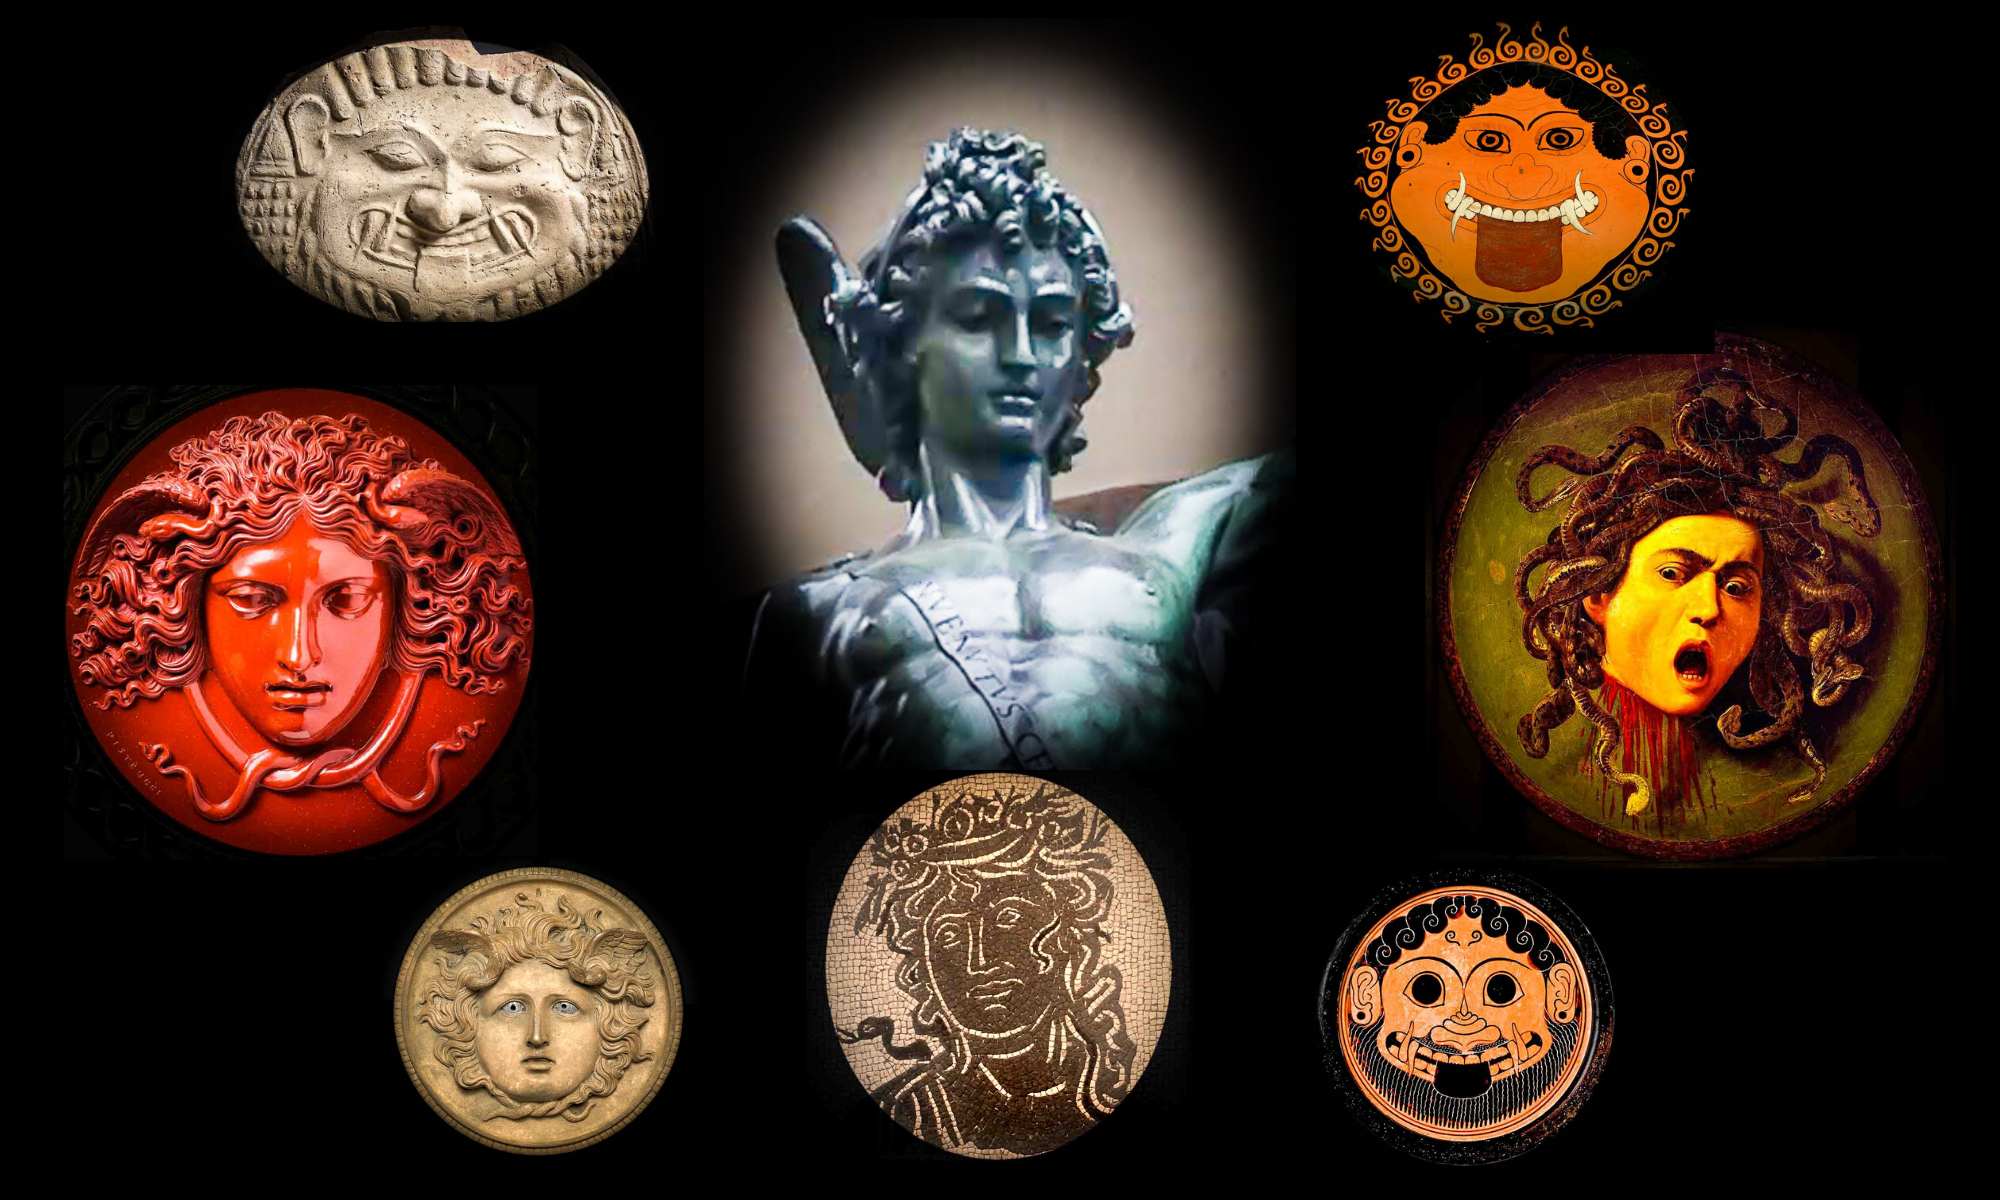 Greek Gorgon Sisters Goddess Medusa With Wild Snake Hair And LED Red Eyes  Statue